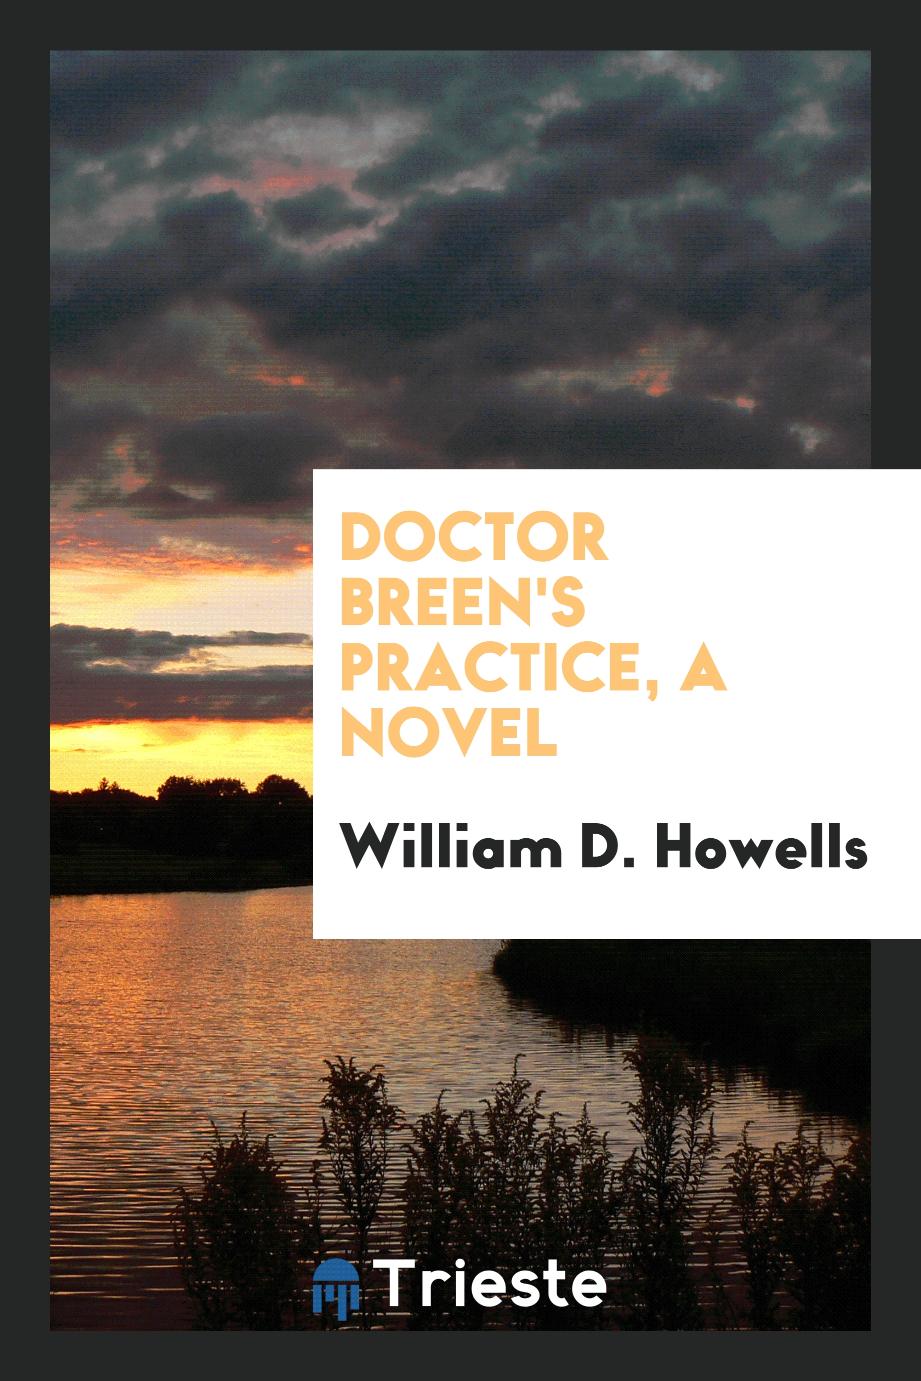 Doctor Breen's practice, a novel